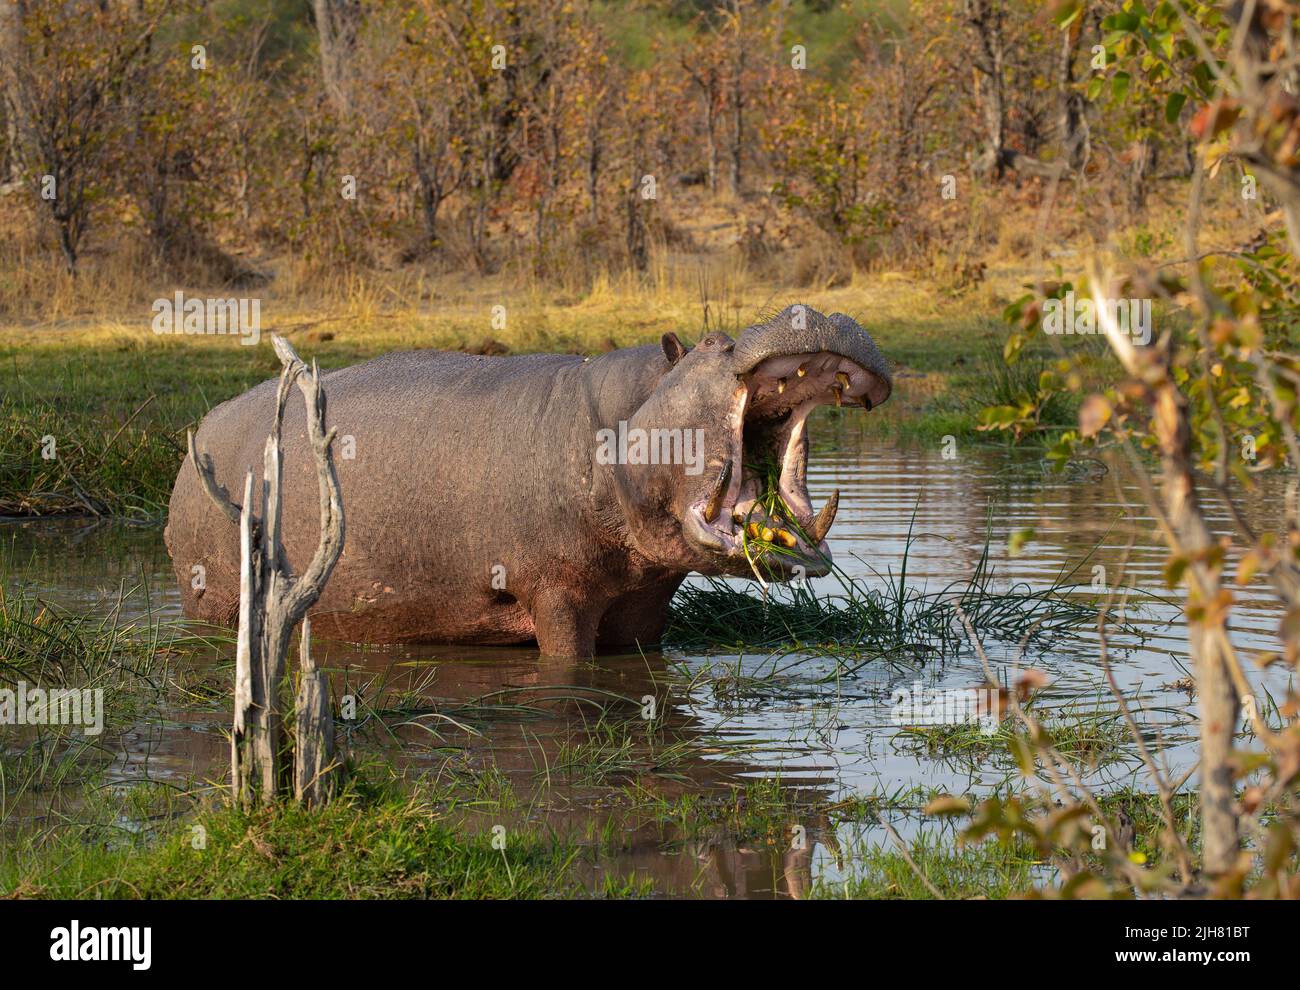 Hippopotamus (Hippopotamus amphibius) belching grass at a waterhole Stock Photo